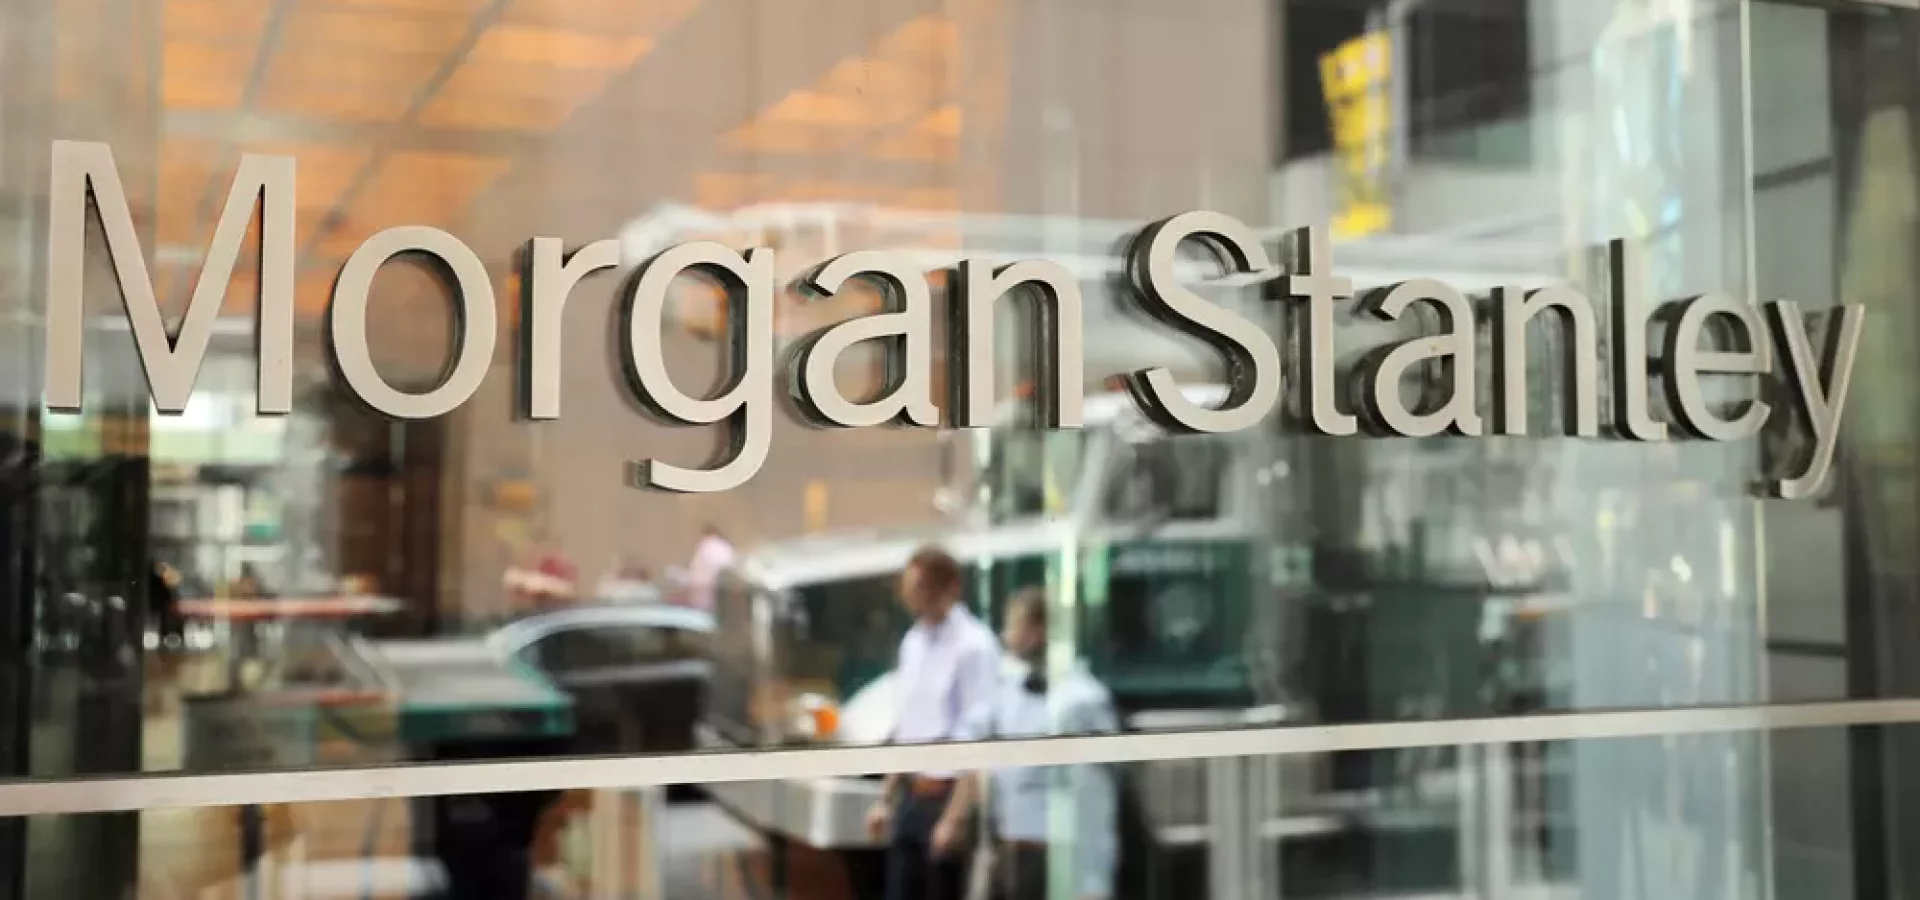 Morgan Stanley Invokes “Buying the Dip”